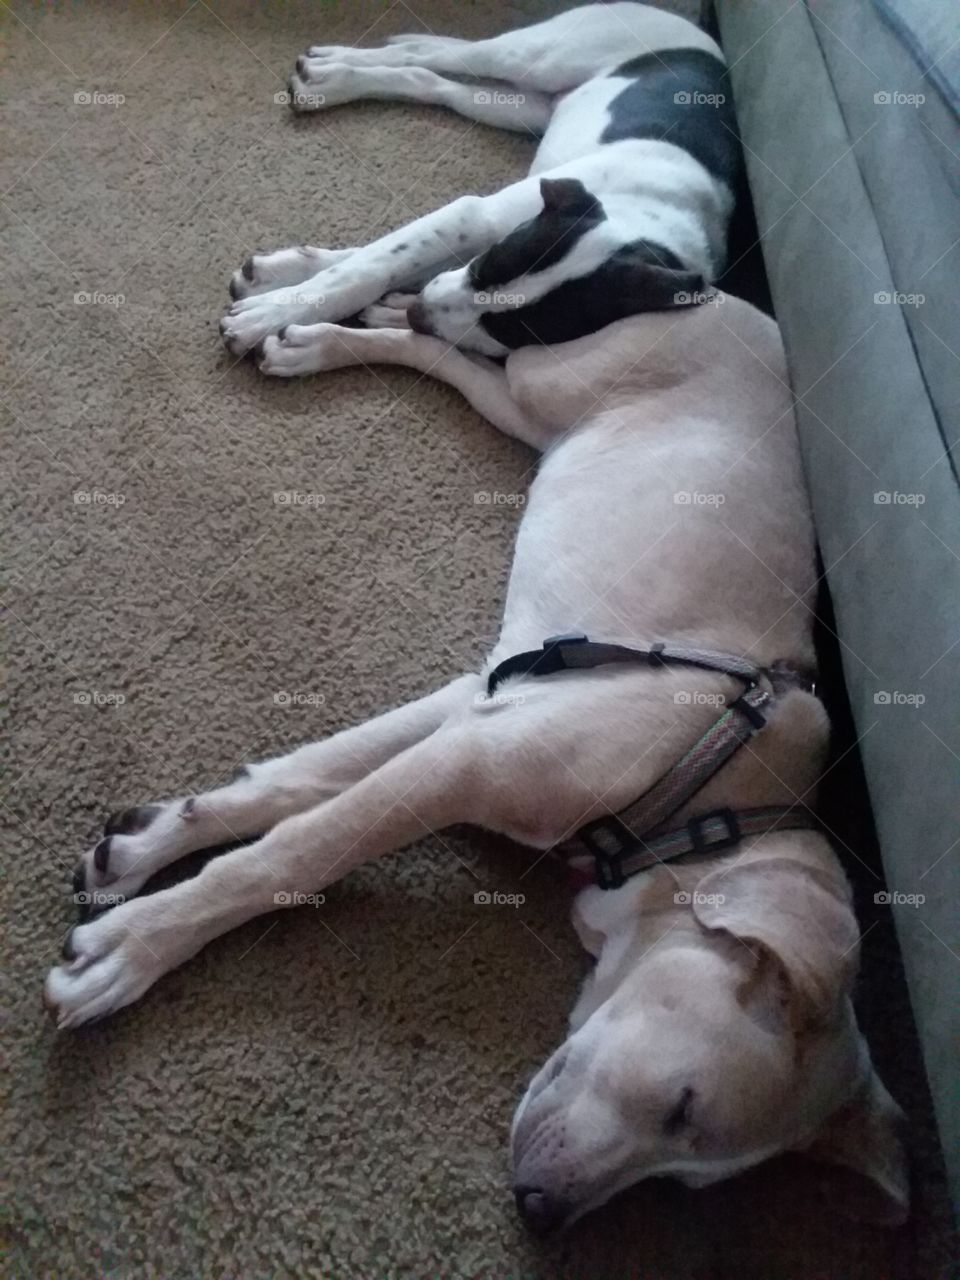 sleeping dogs lie